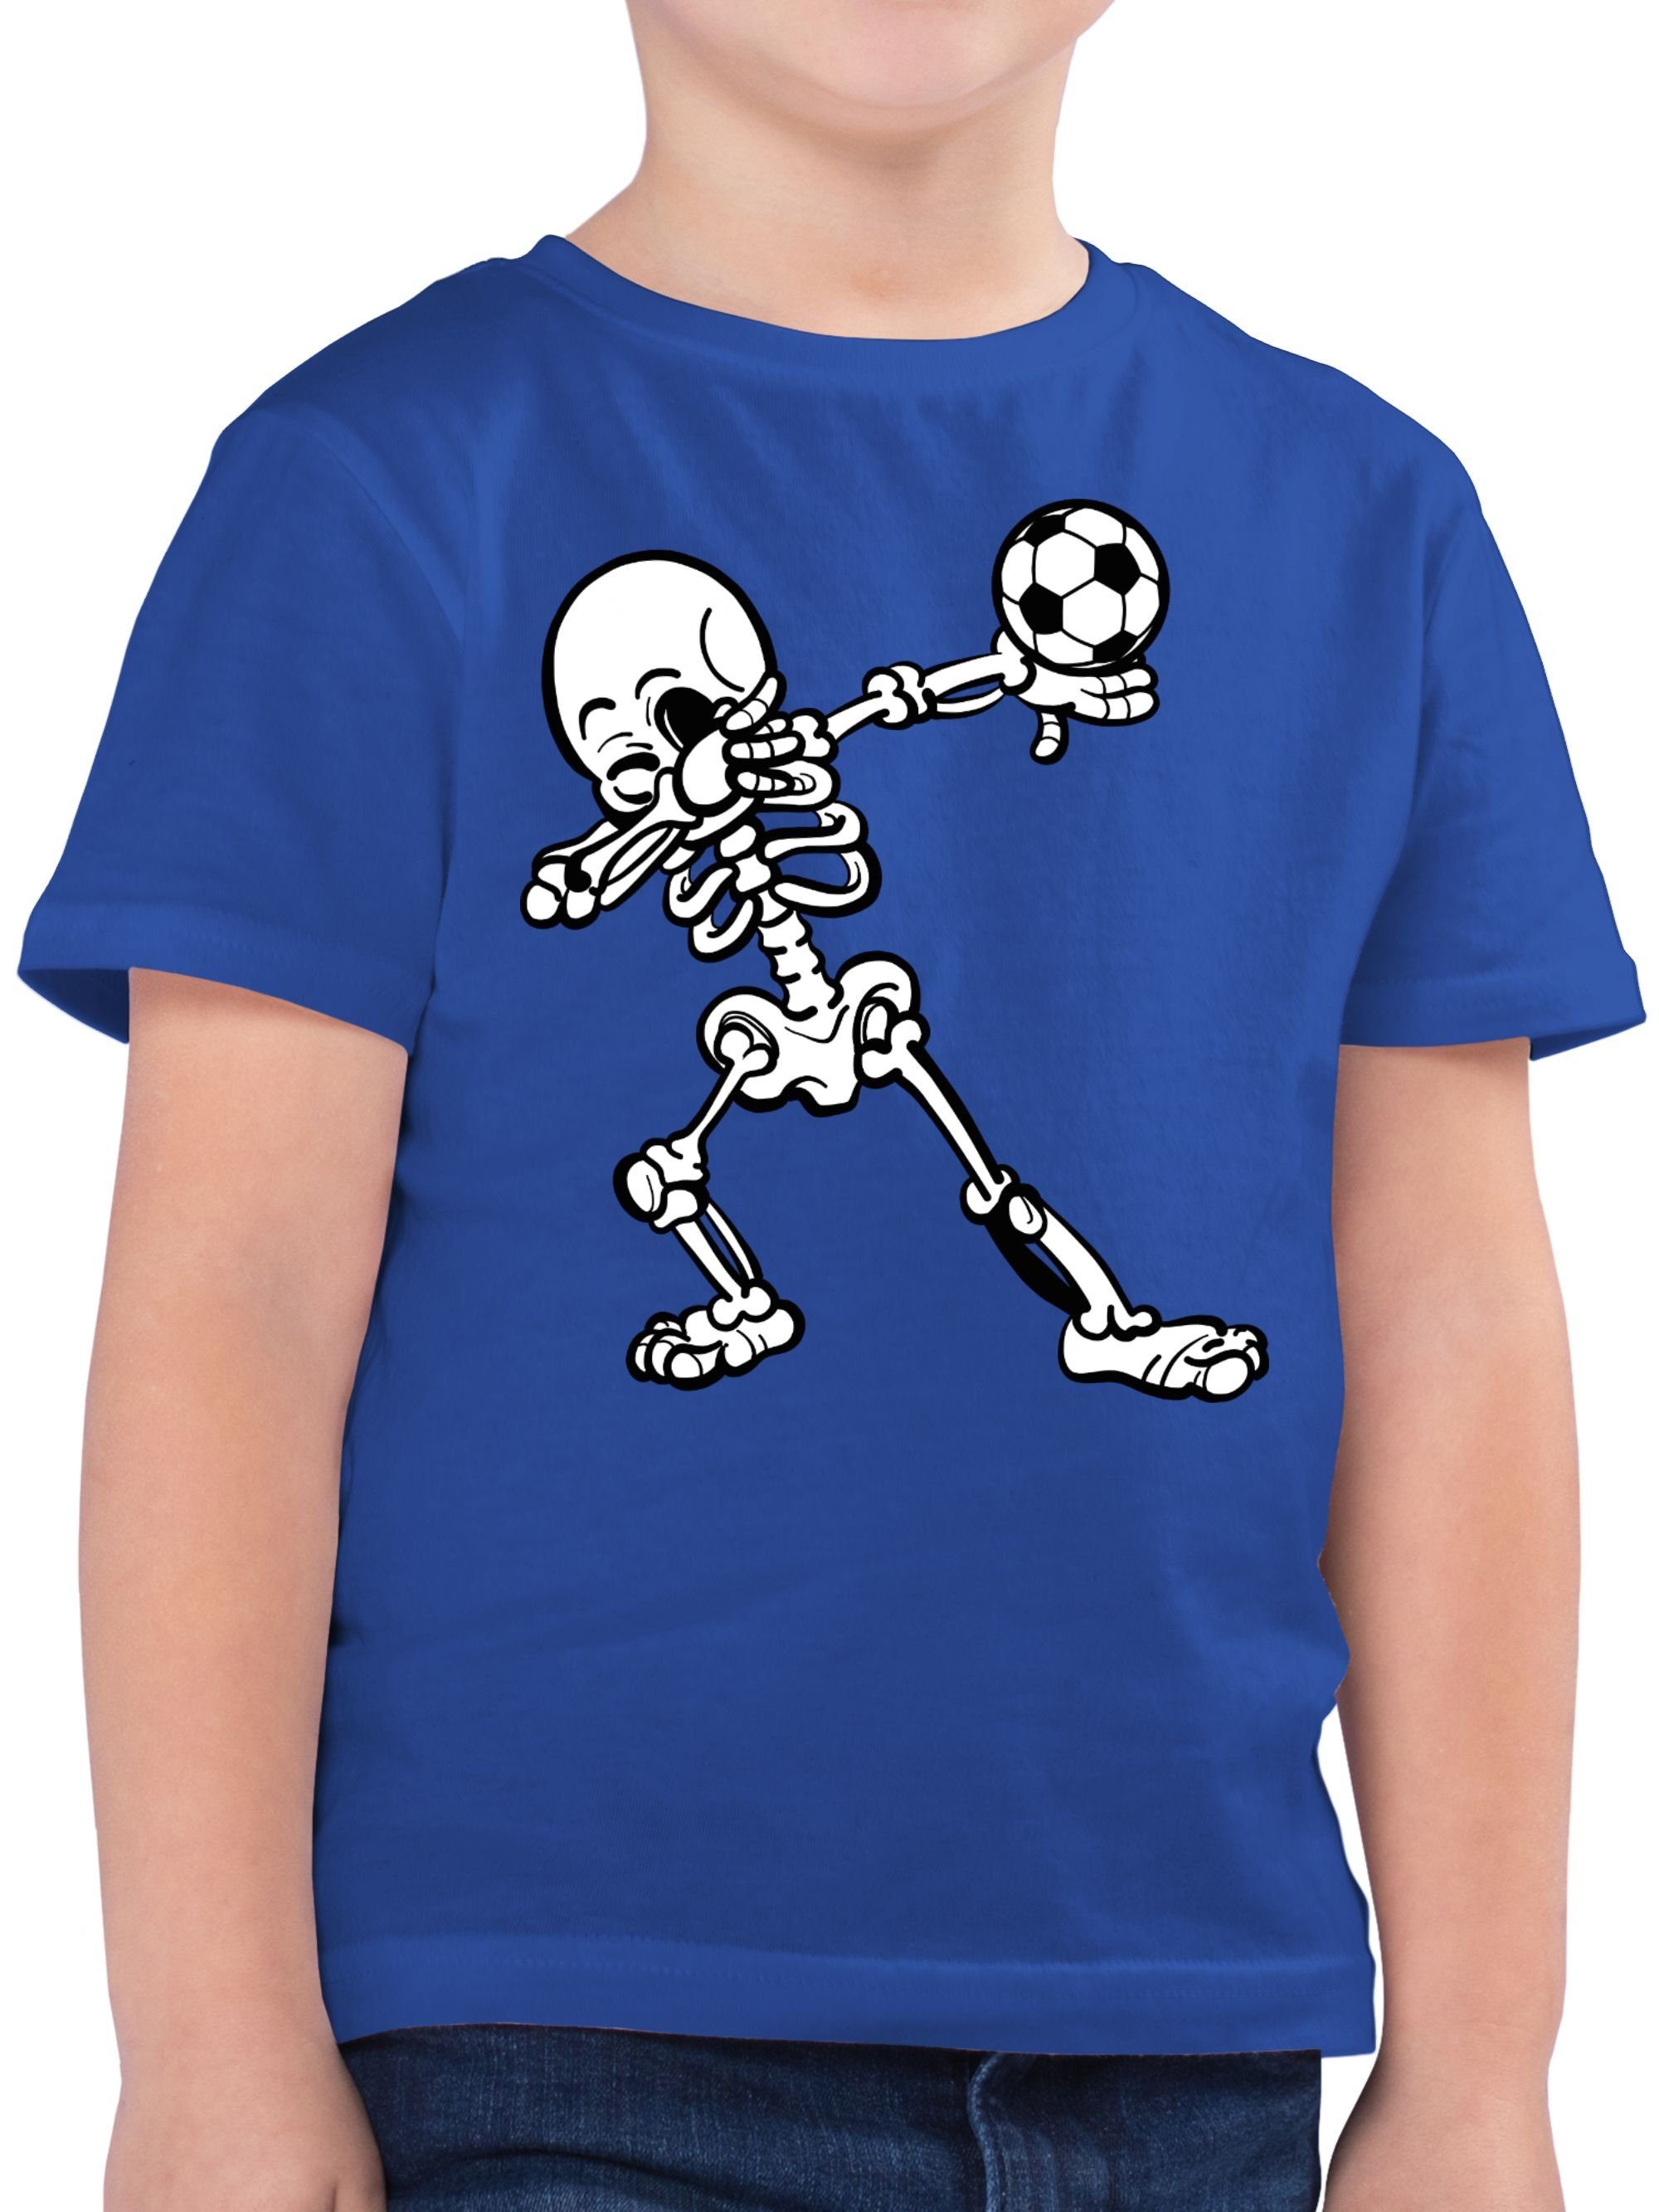 Kinder 3 Skelett Kleidung T-Shirt Sport Royalblau mit Shirtracer Dabbendes Fussball